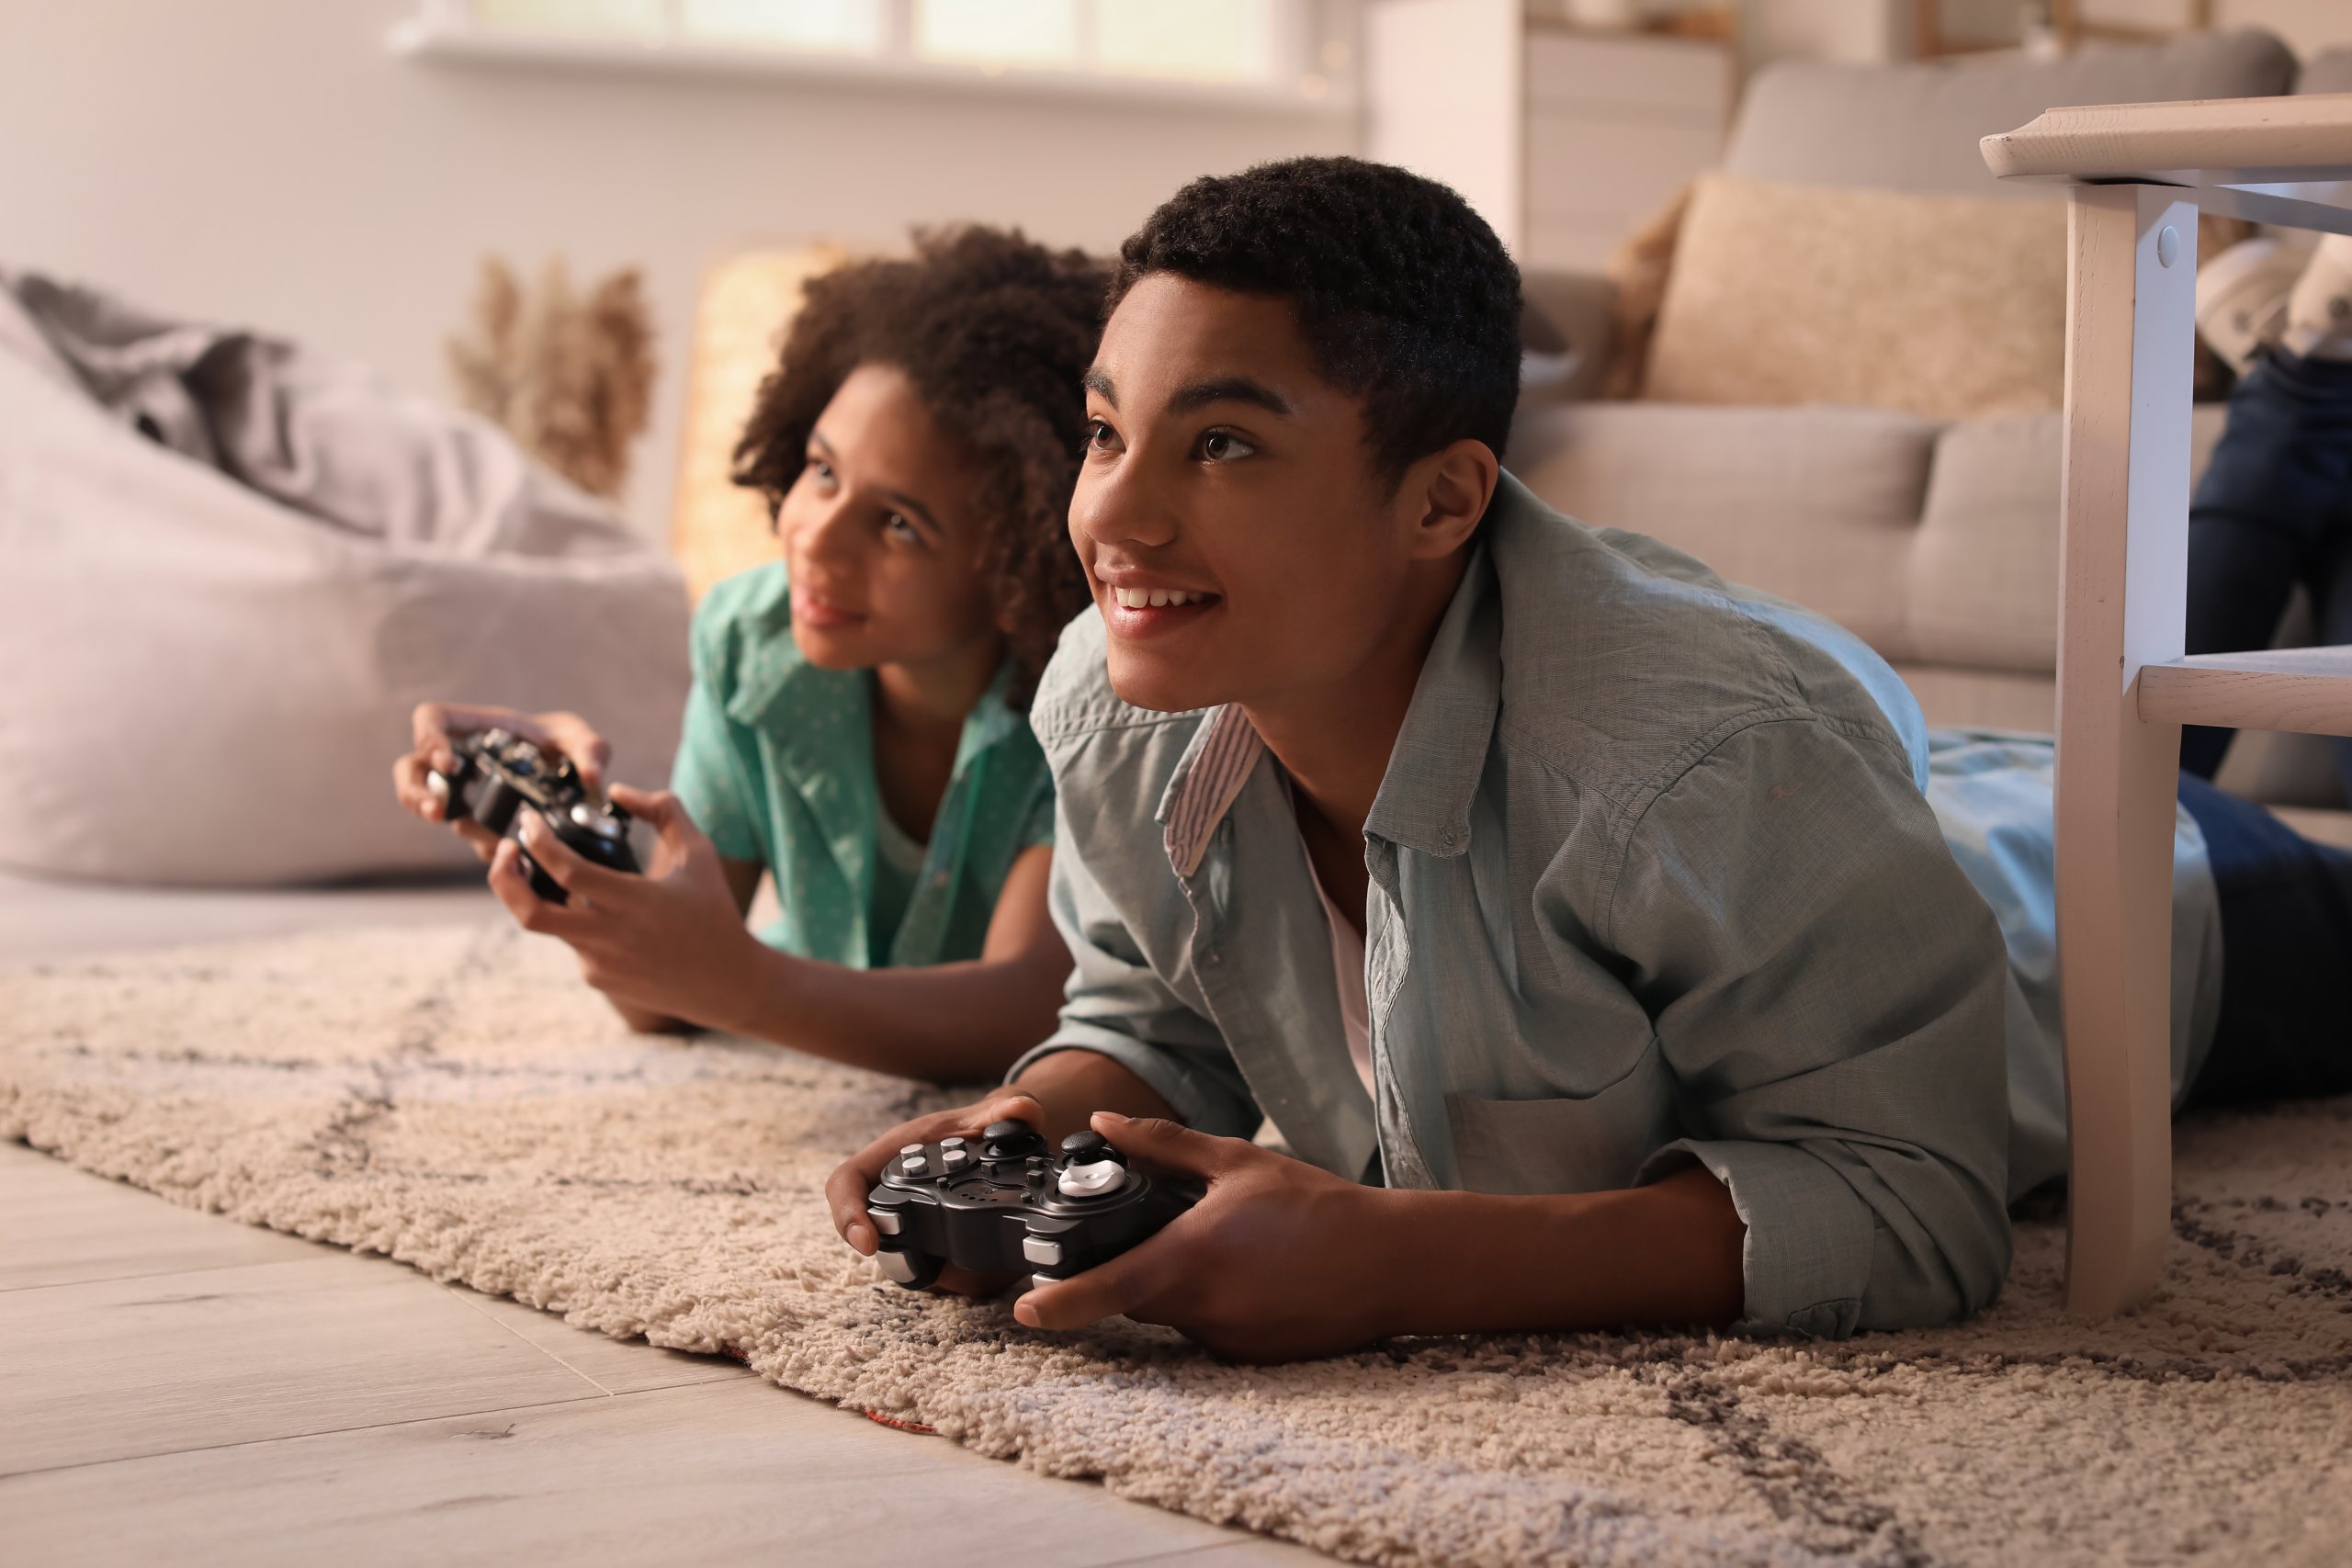 Older kids may want dedicated "Gaming Spaces"